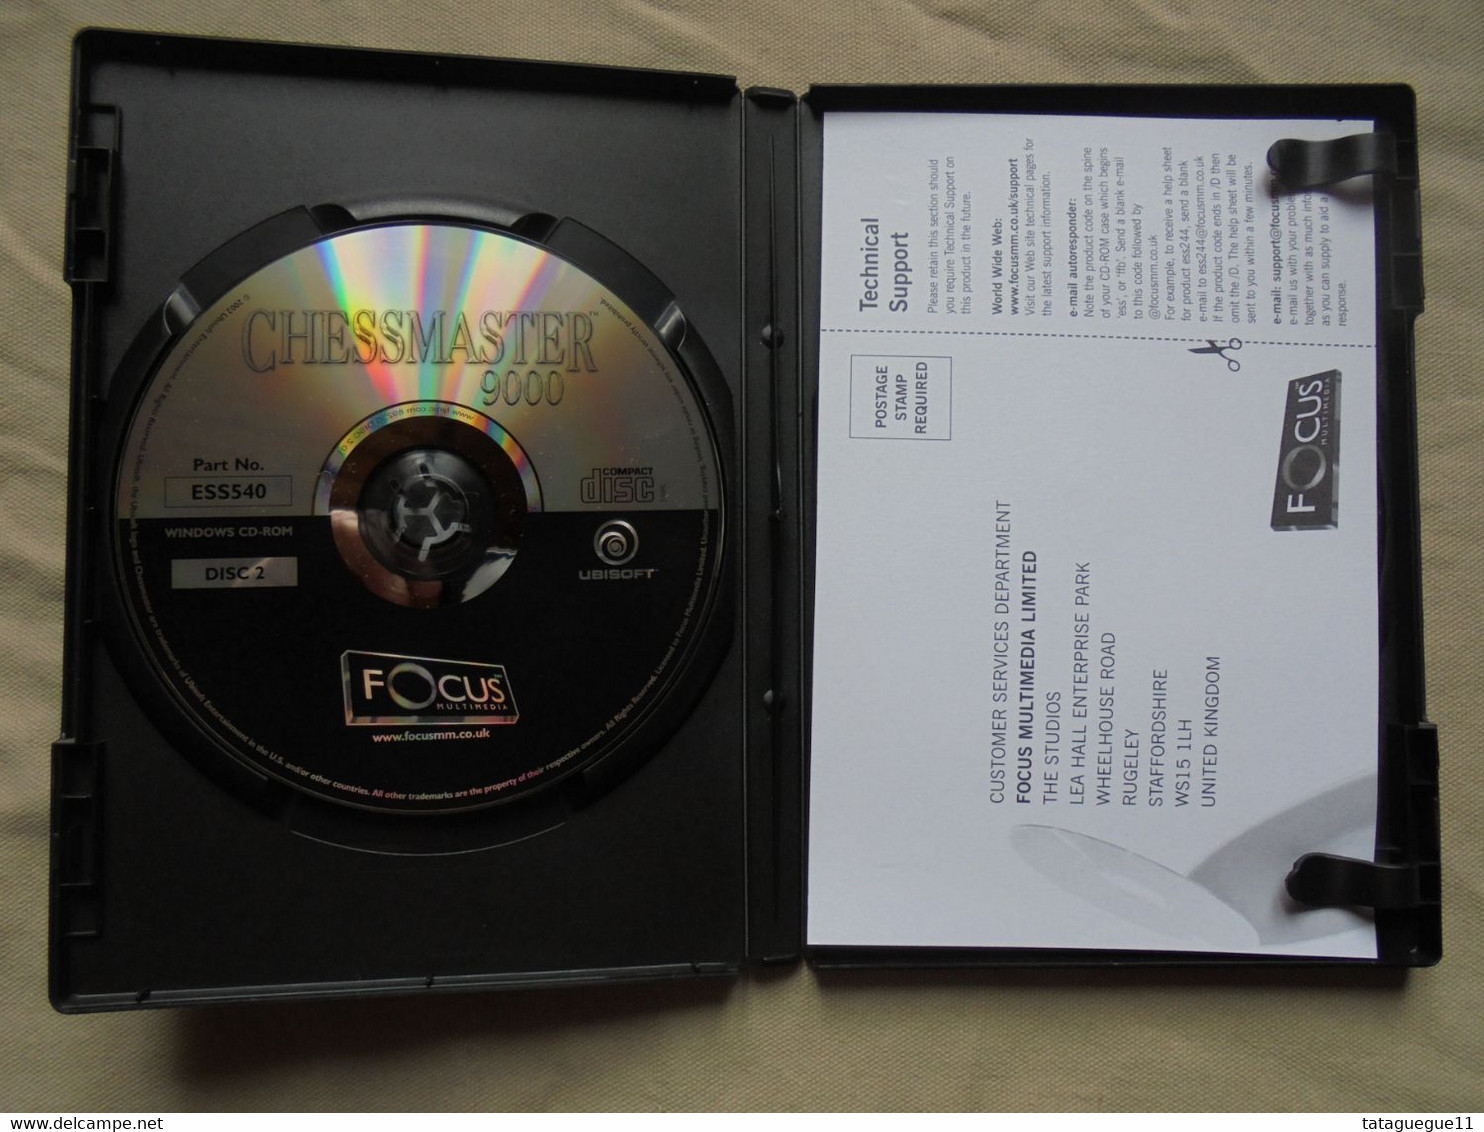 Vintage - Jeu PC CD Rom - Chessmaster 9000 - 2006 - Juegos PC